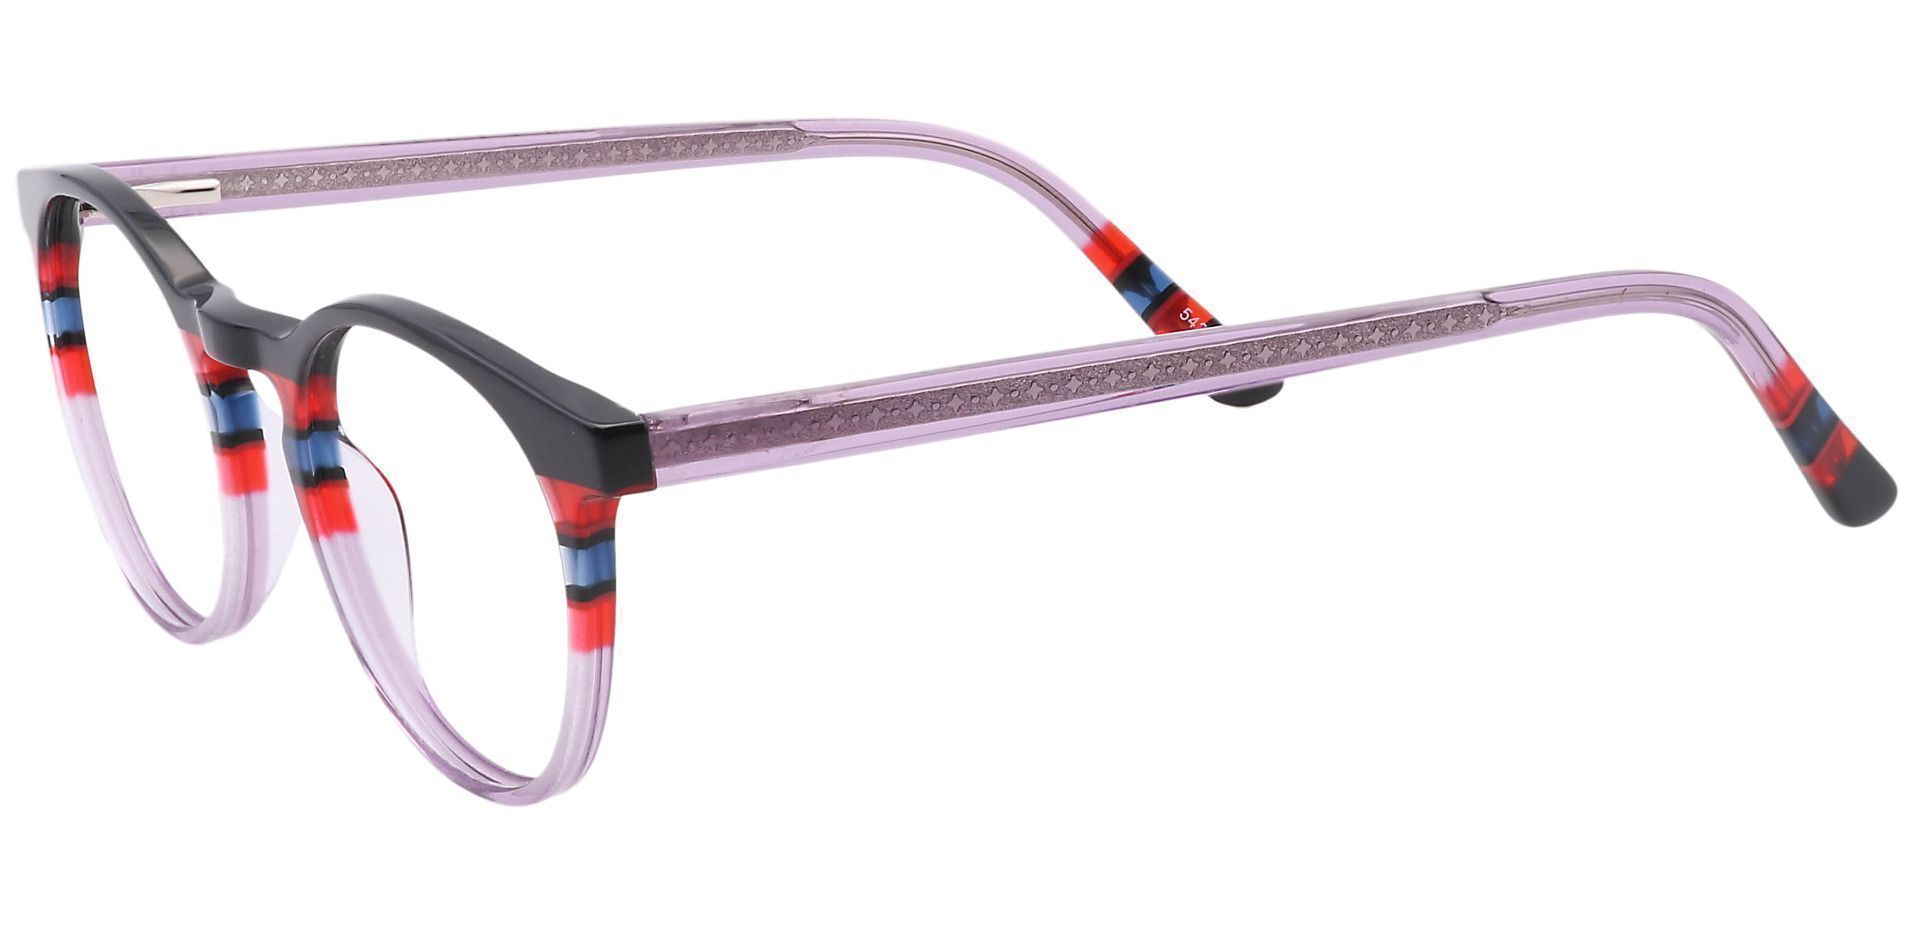 Jellie Round Progressive Glasses - Black/red Lavender Stripe  Purple